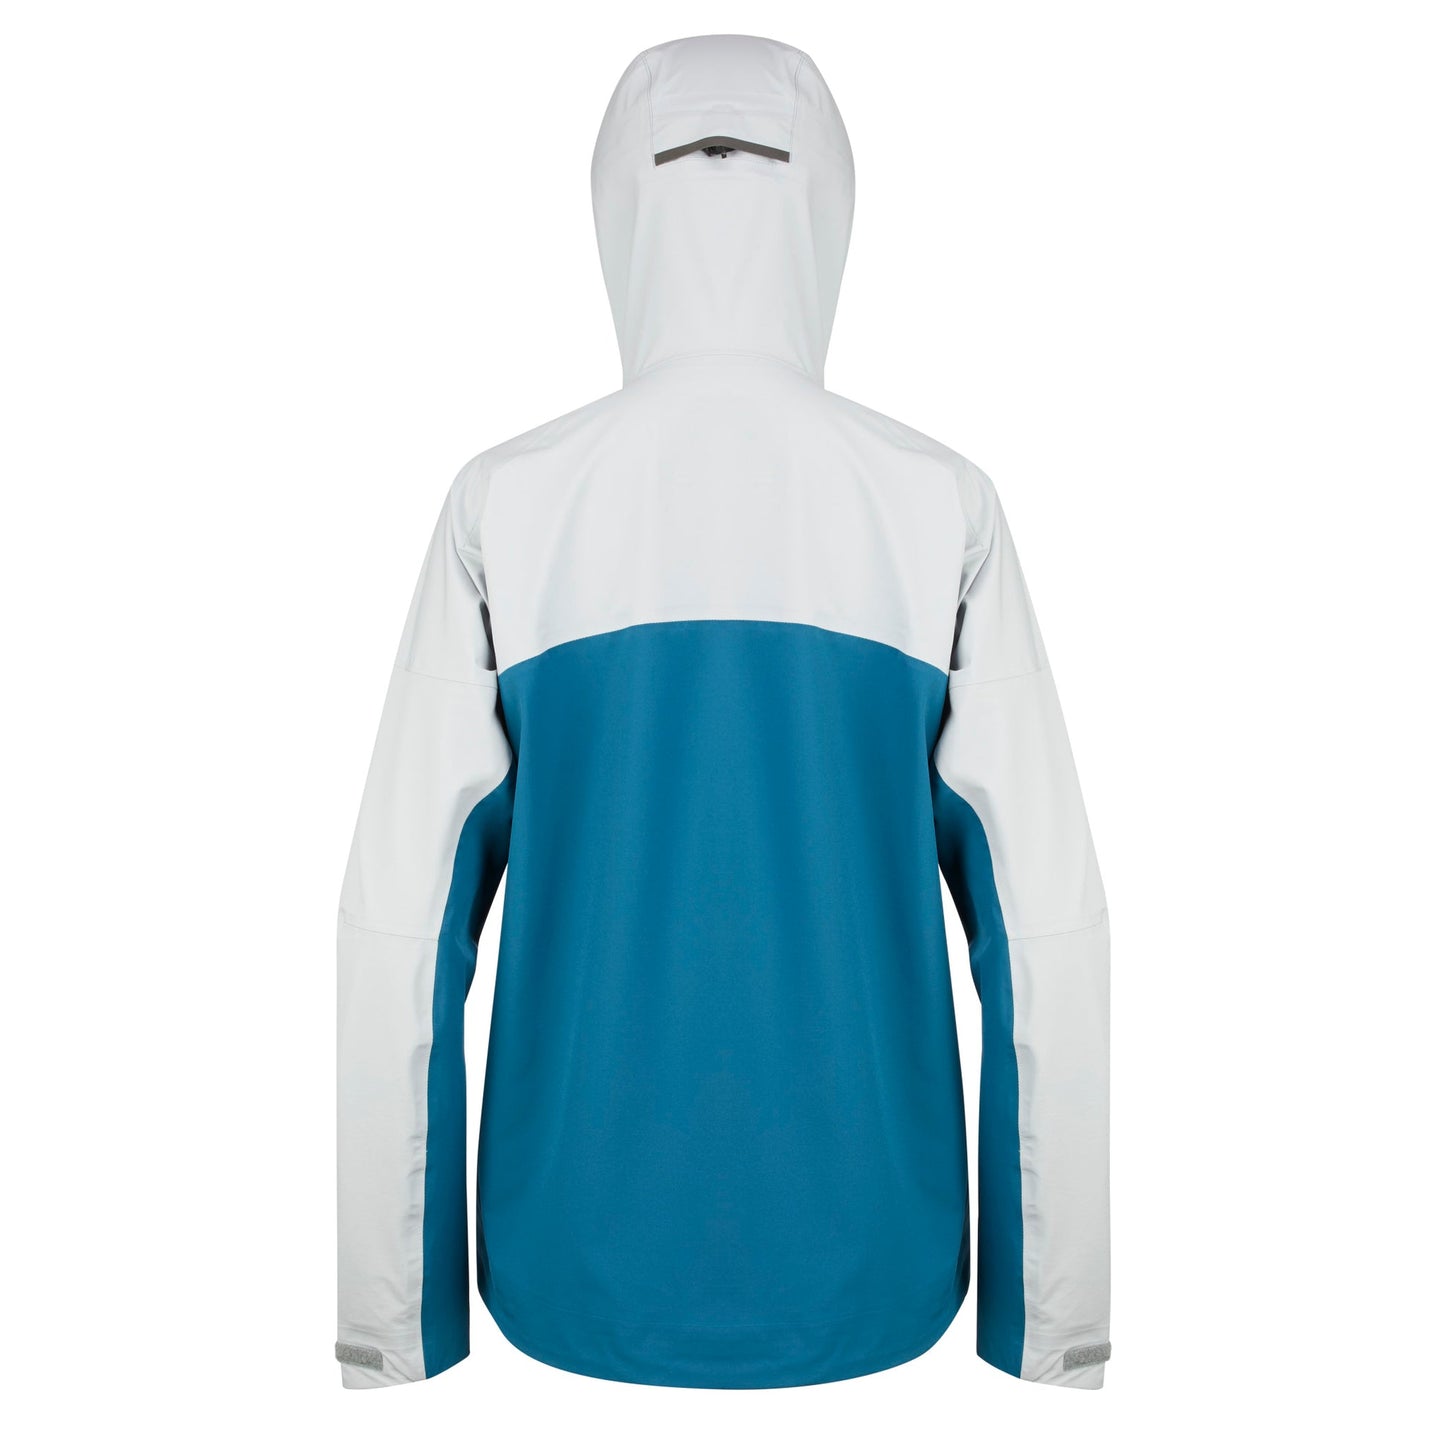 Mustang Women's Callan Waterproof Jacket Large (Mid Grey - Ocean Blue)